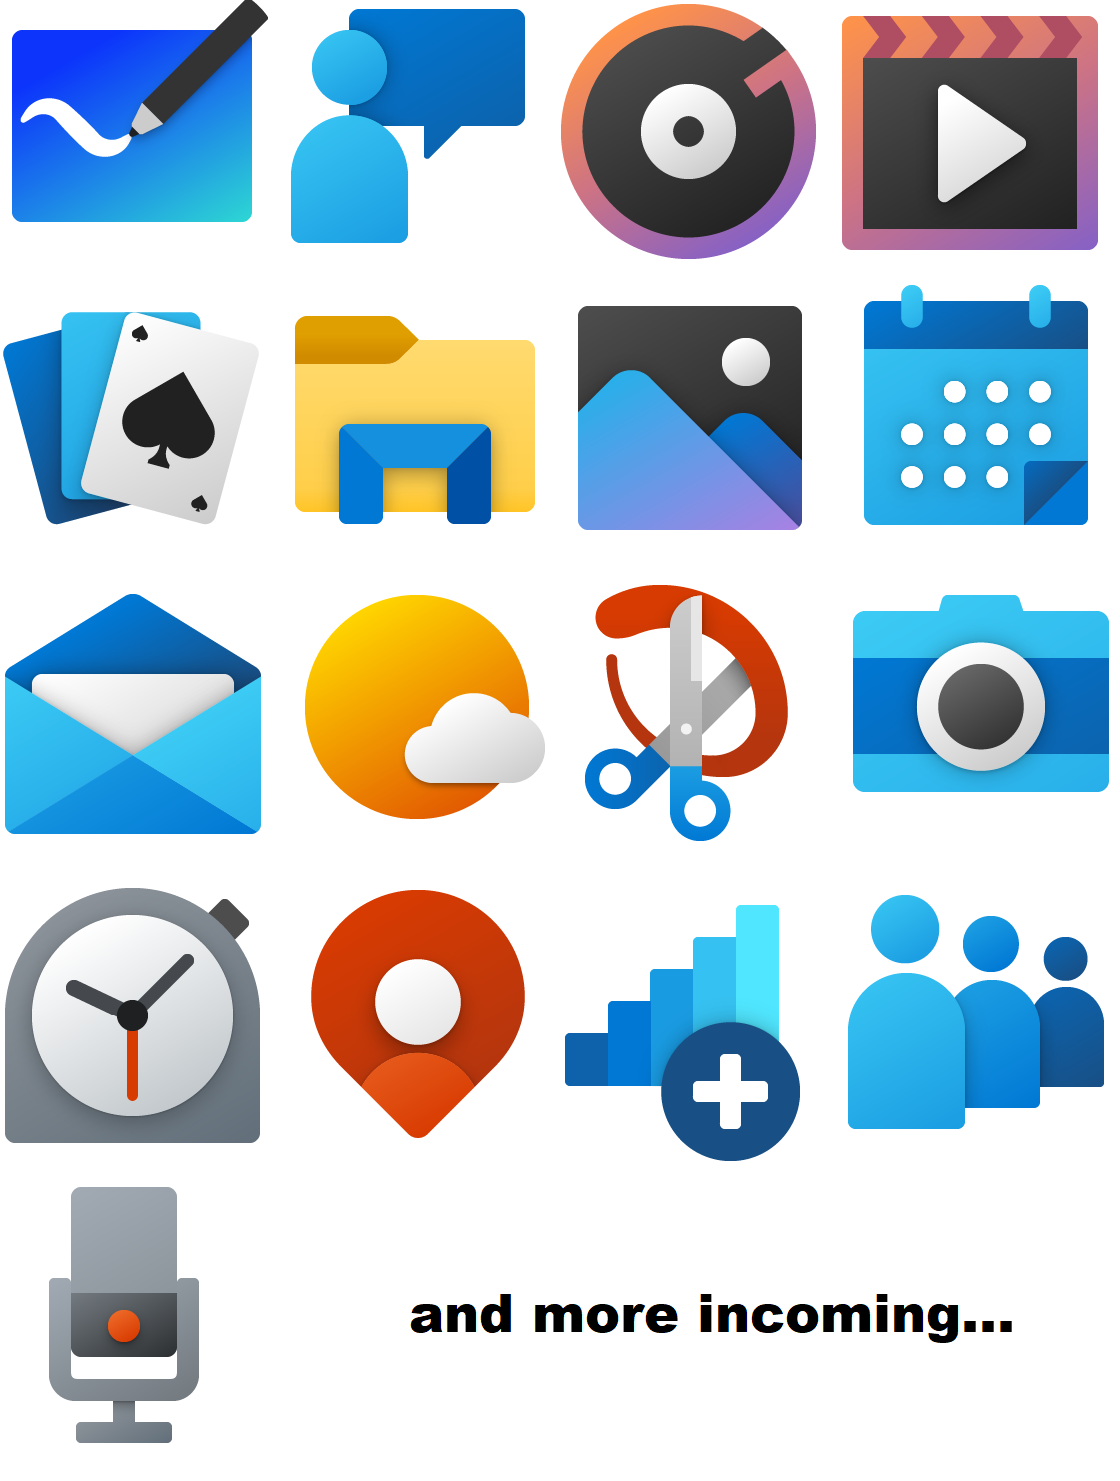 windows app icon generator